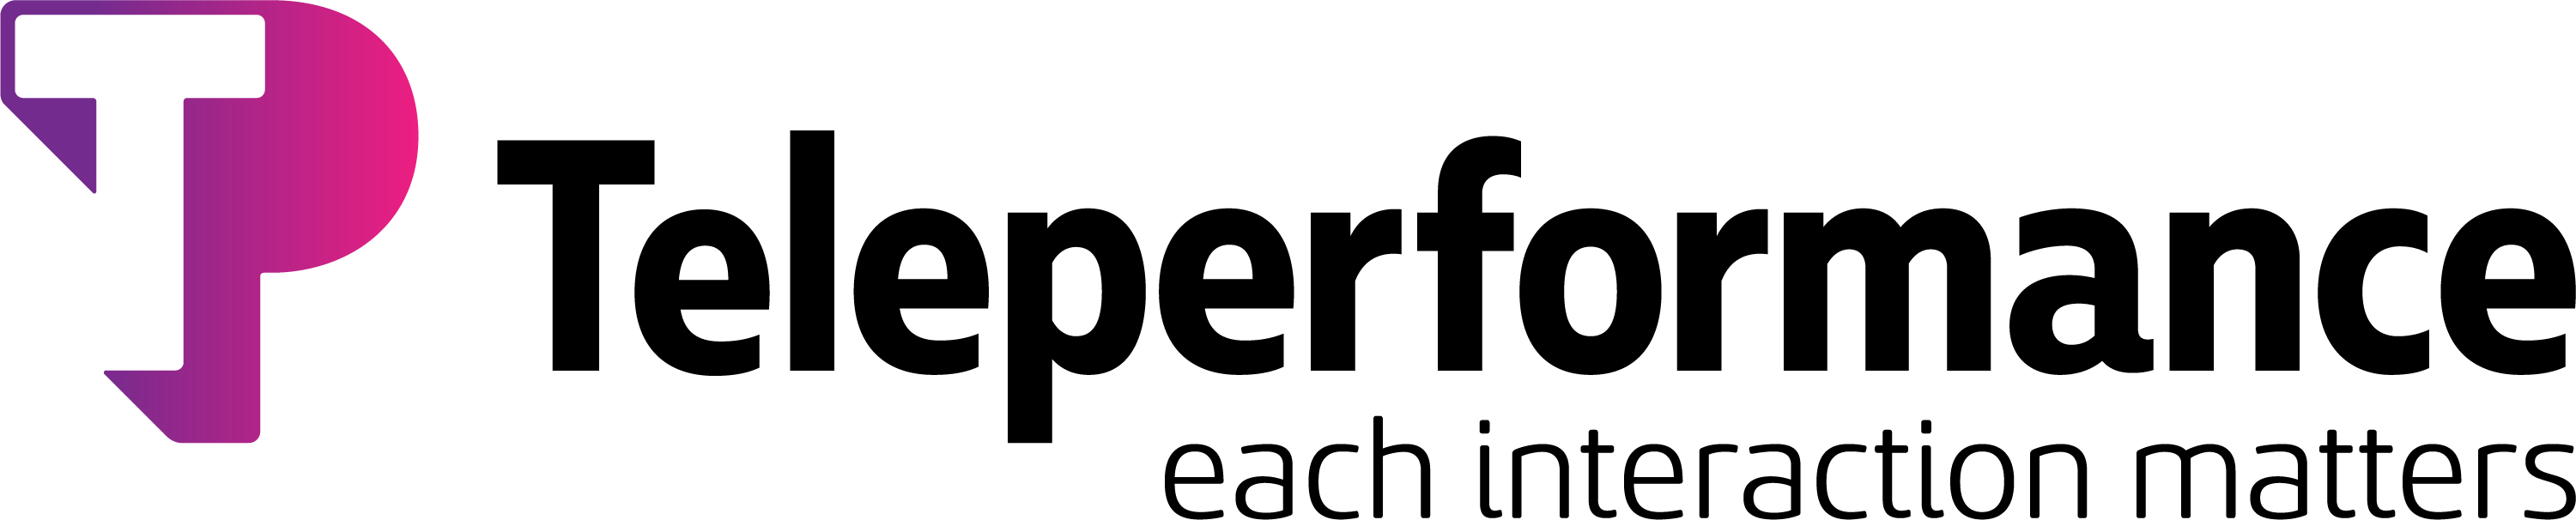 GMT Logo Teleperformance RGB Preferred Version Purple Gradient  August 2018